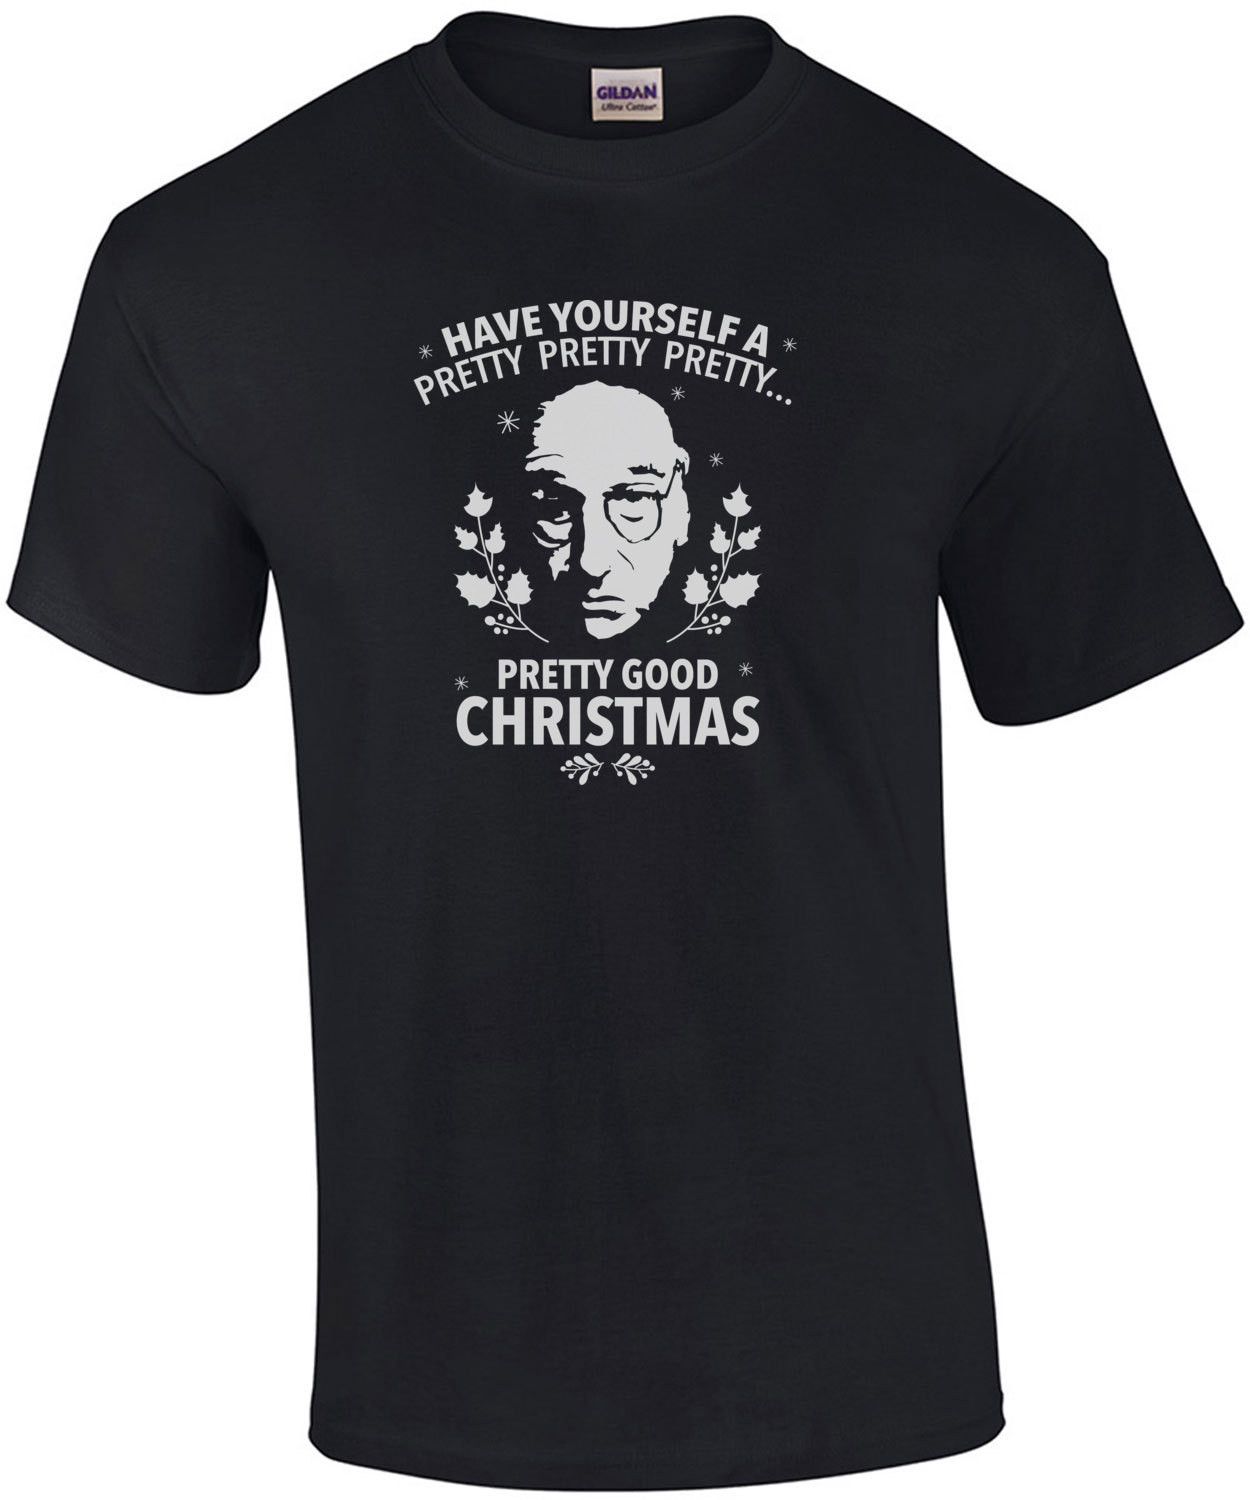 Have yourself a pretty pretty pretty pretty good Christmas - Lary David T-Shirt - Curb Your Ethusiam T-Shirt